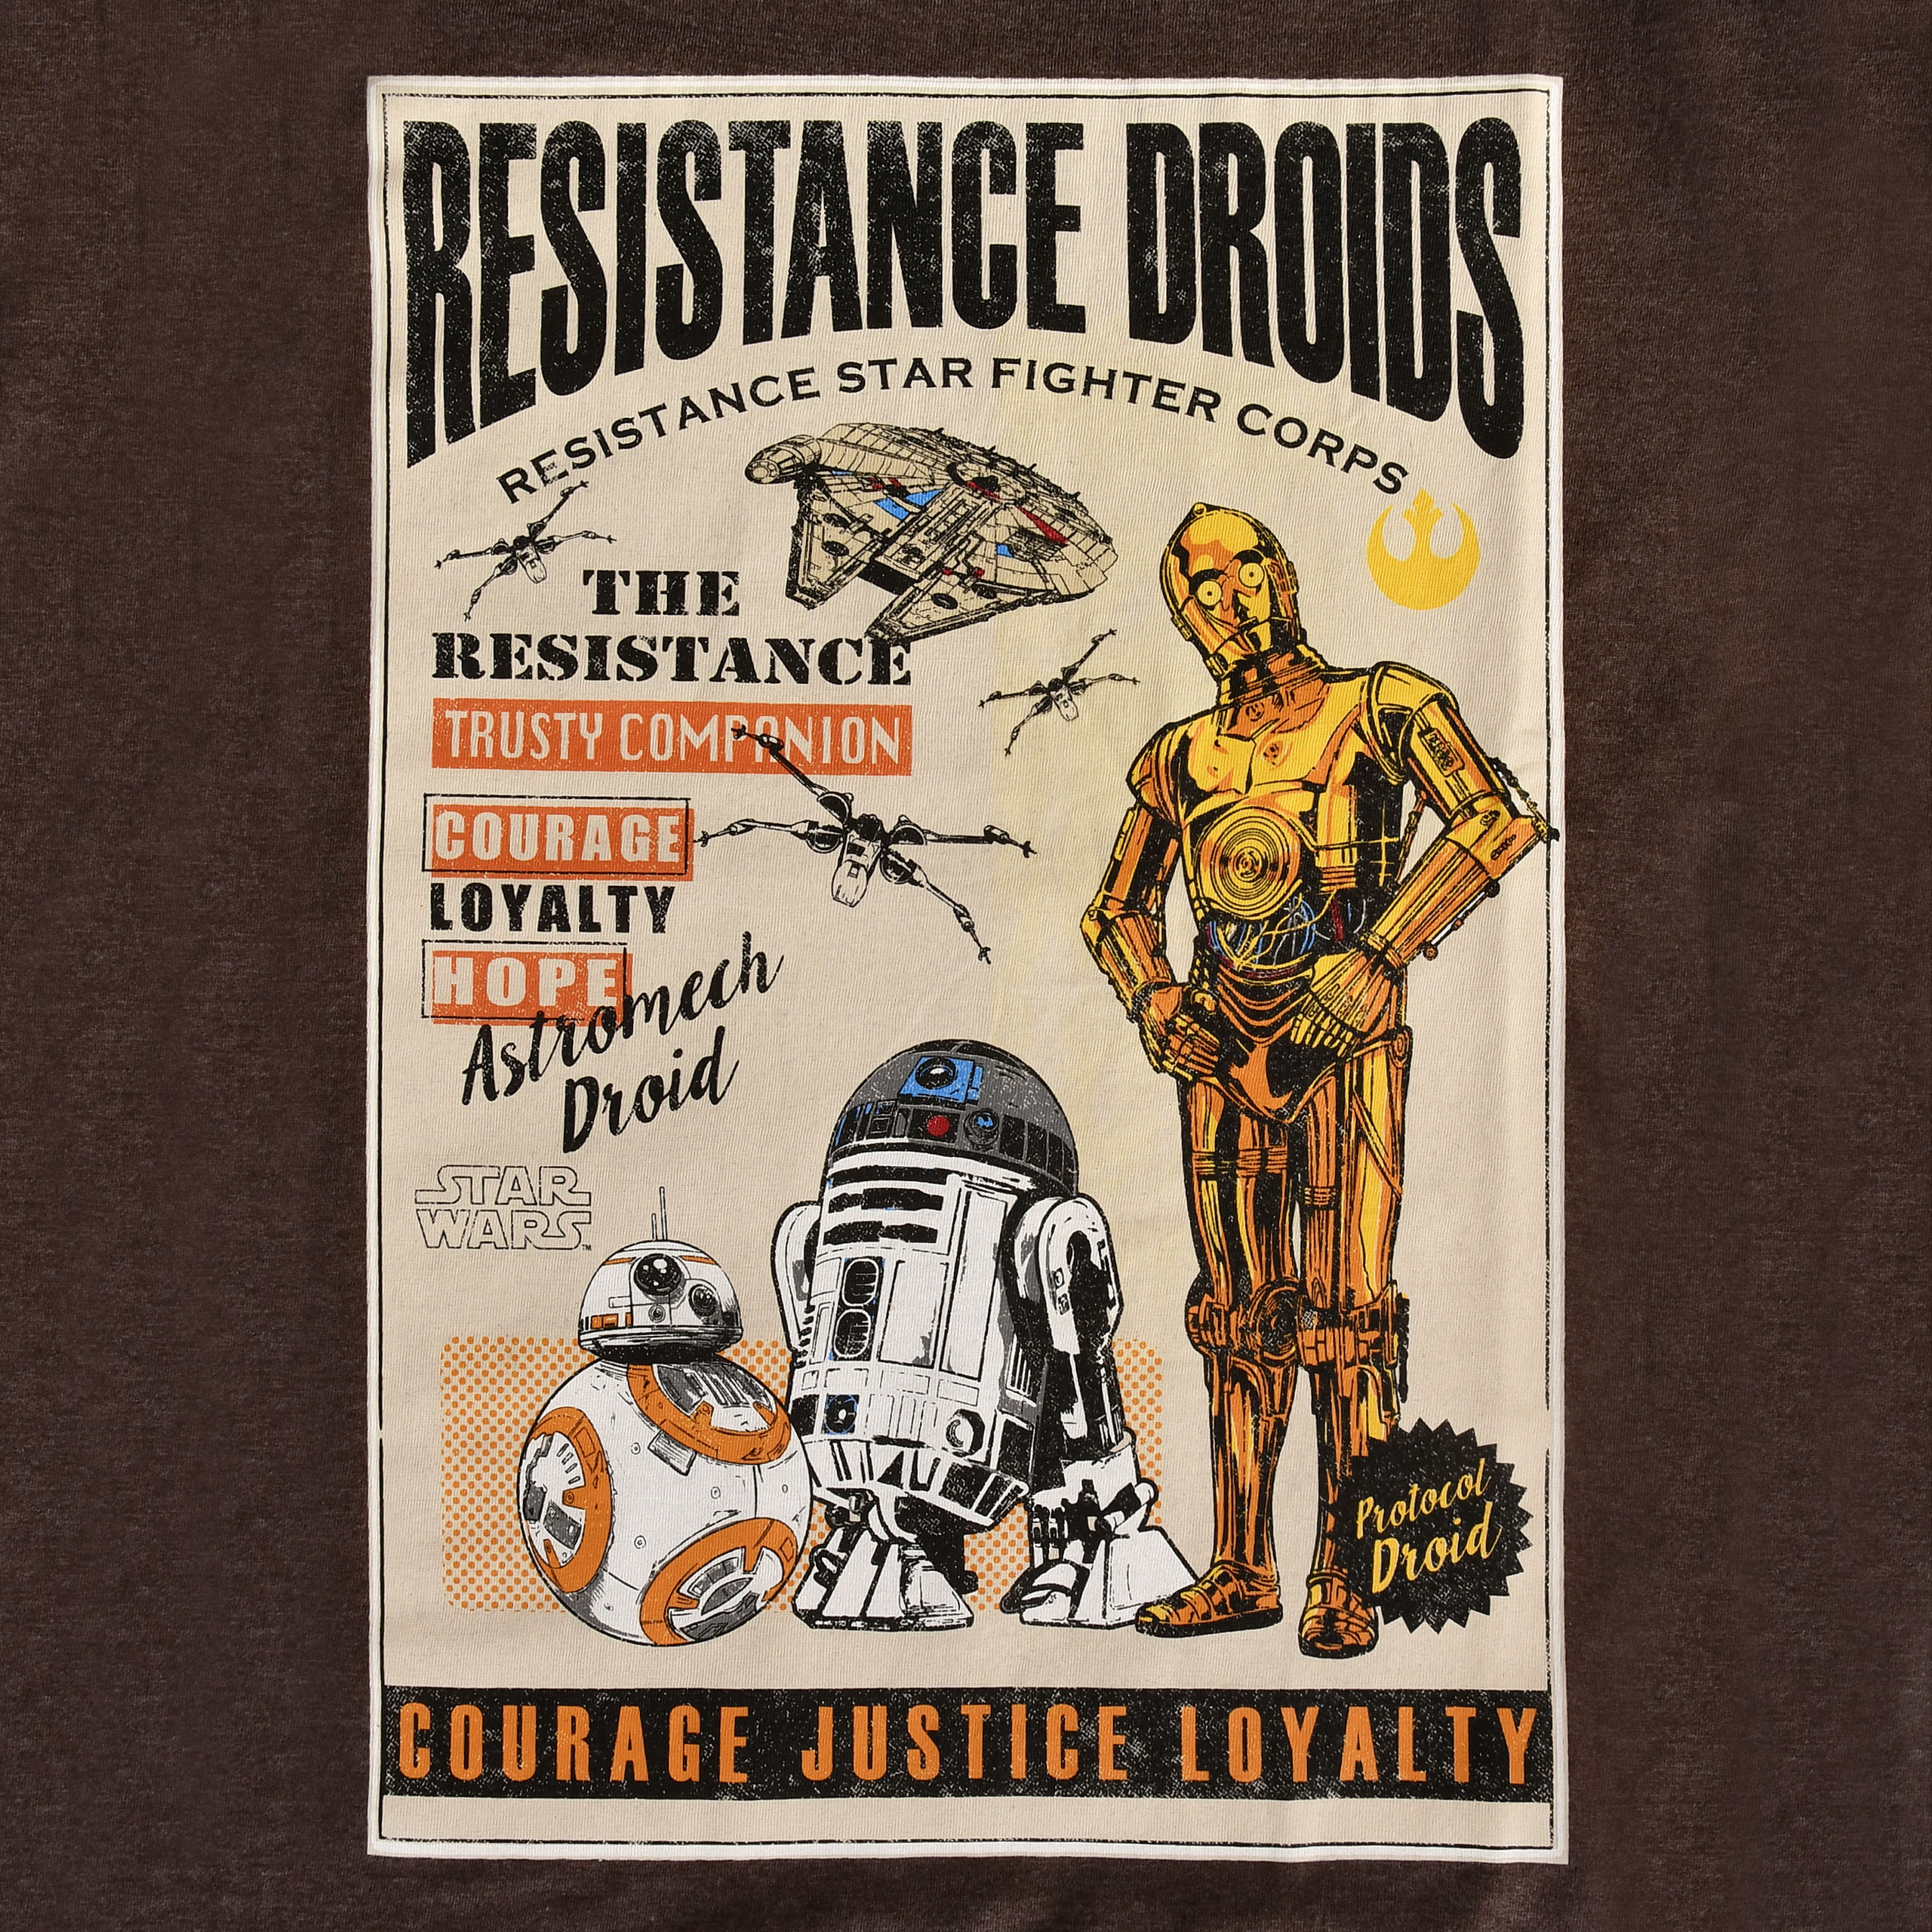 Star Wars - Resistance Droids T-Shirt brown